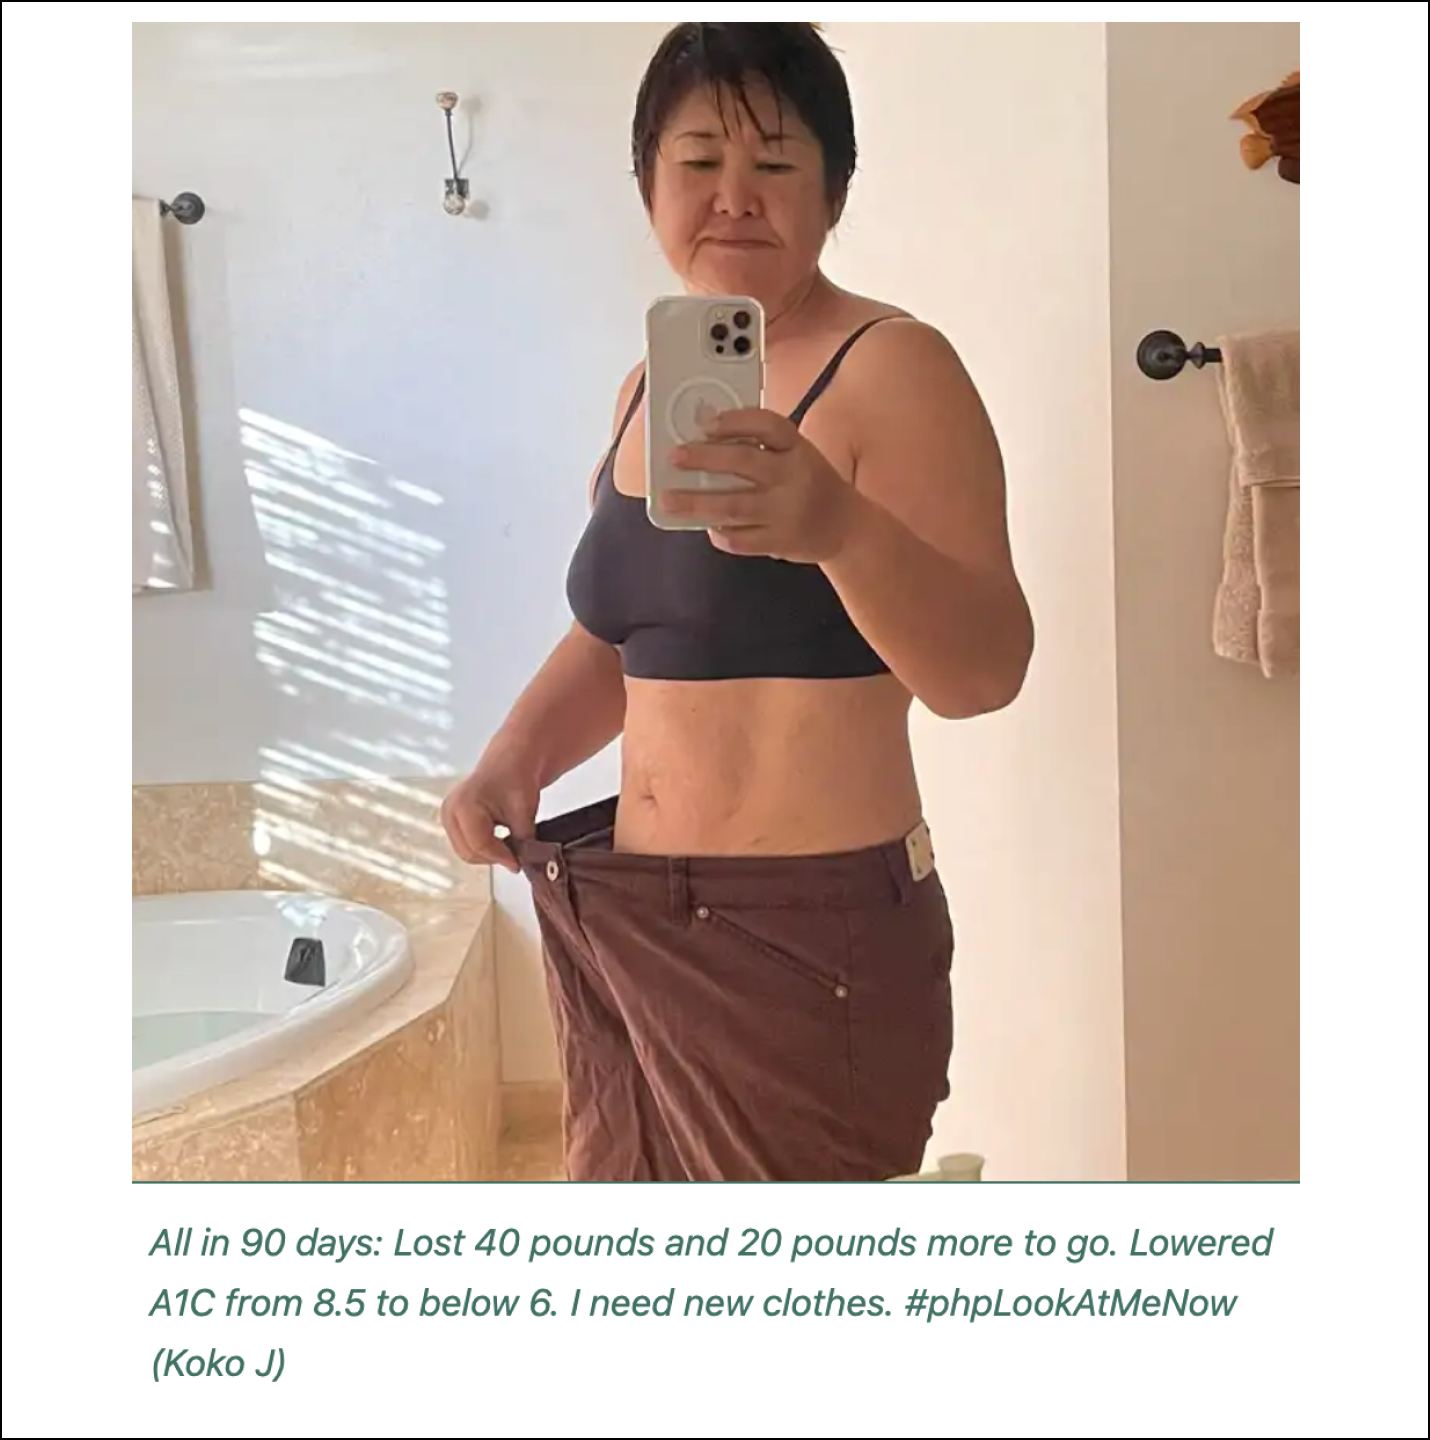 Woman shows weight loss progress in a mirror selfie.